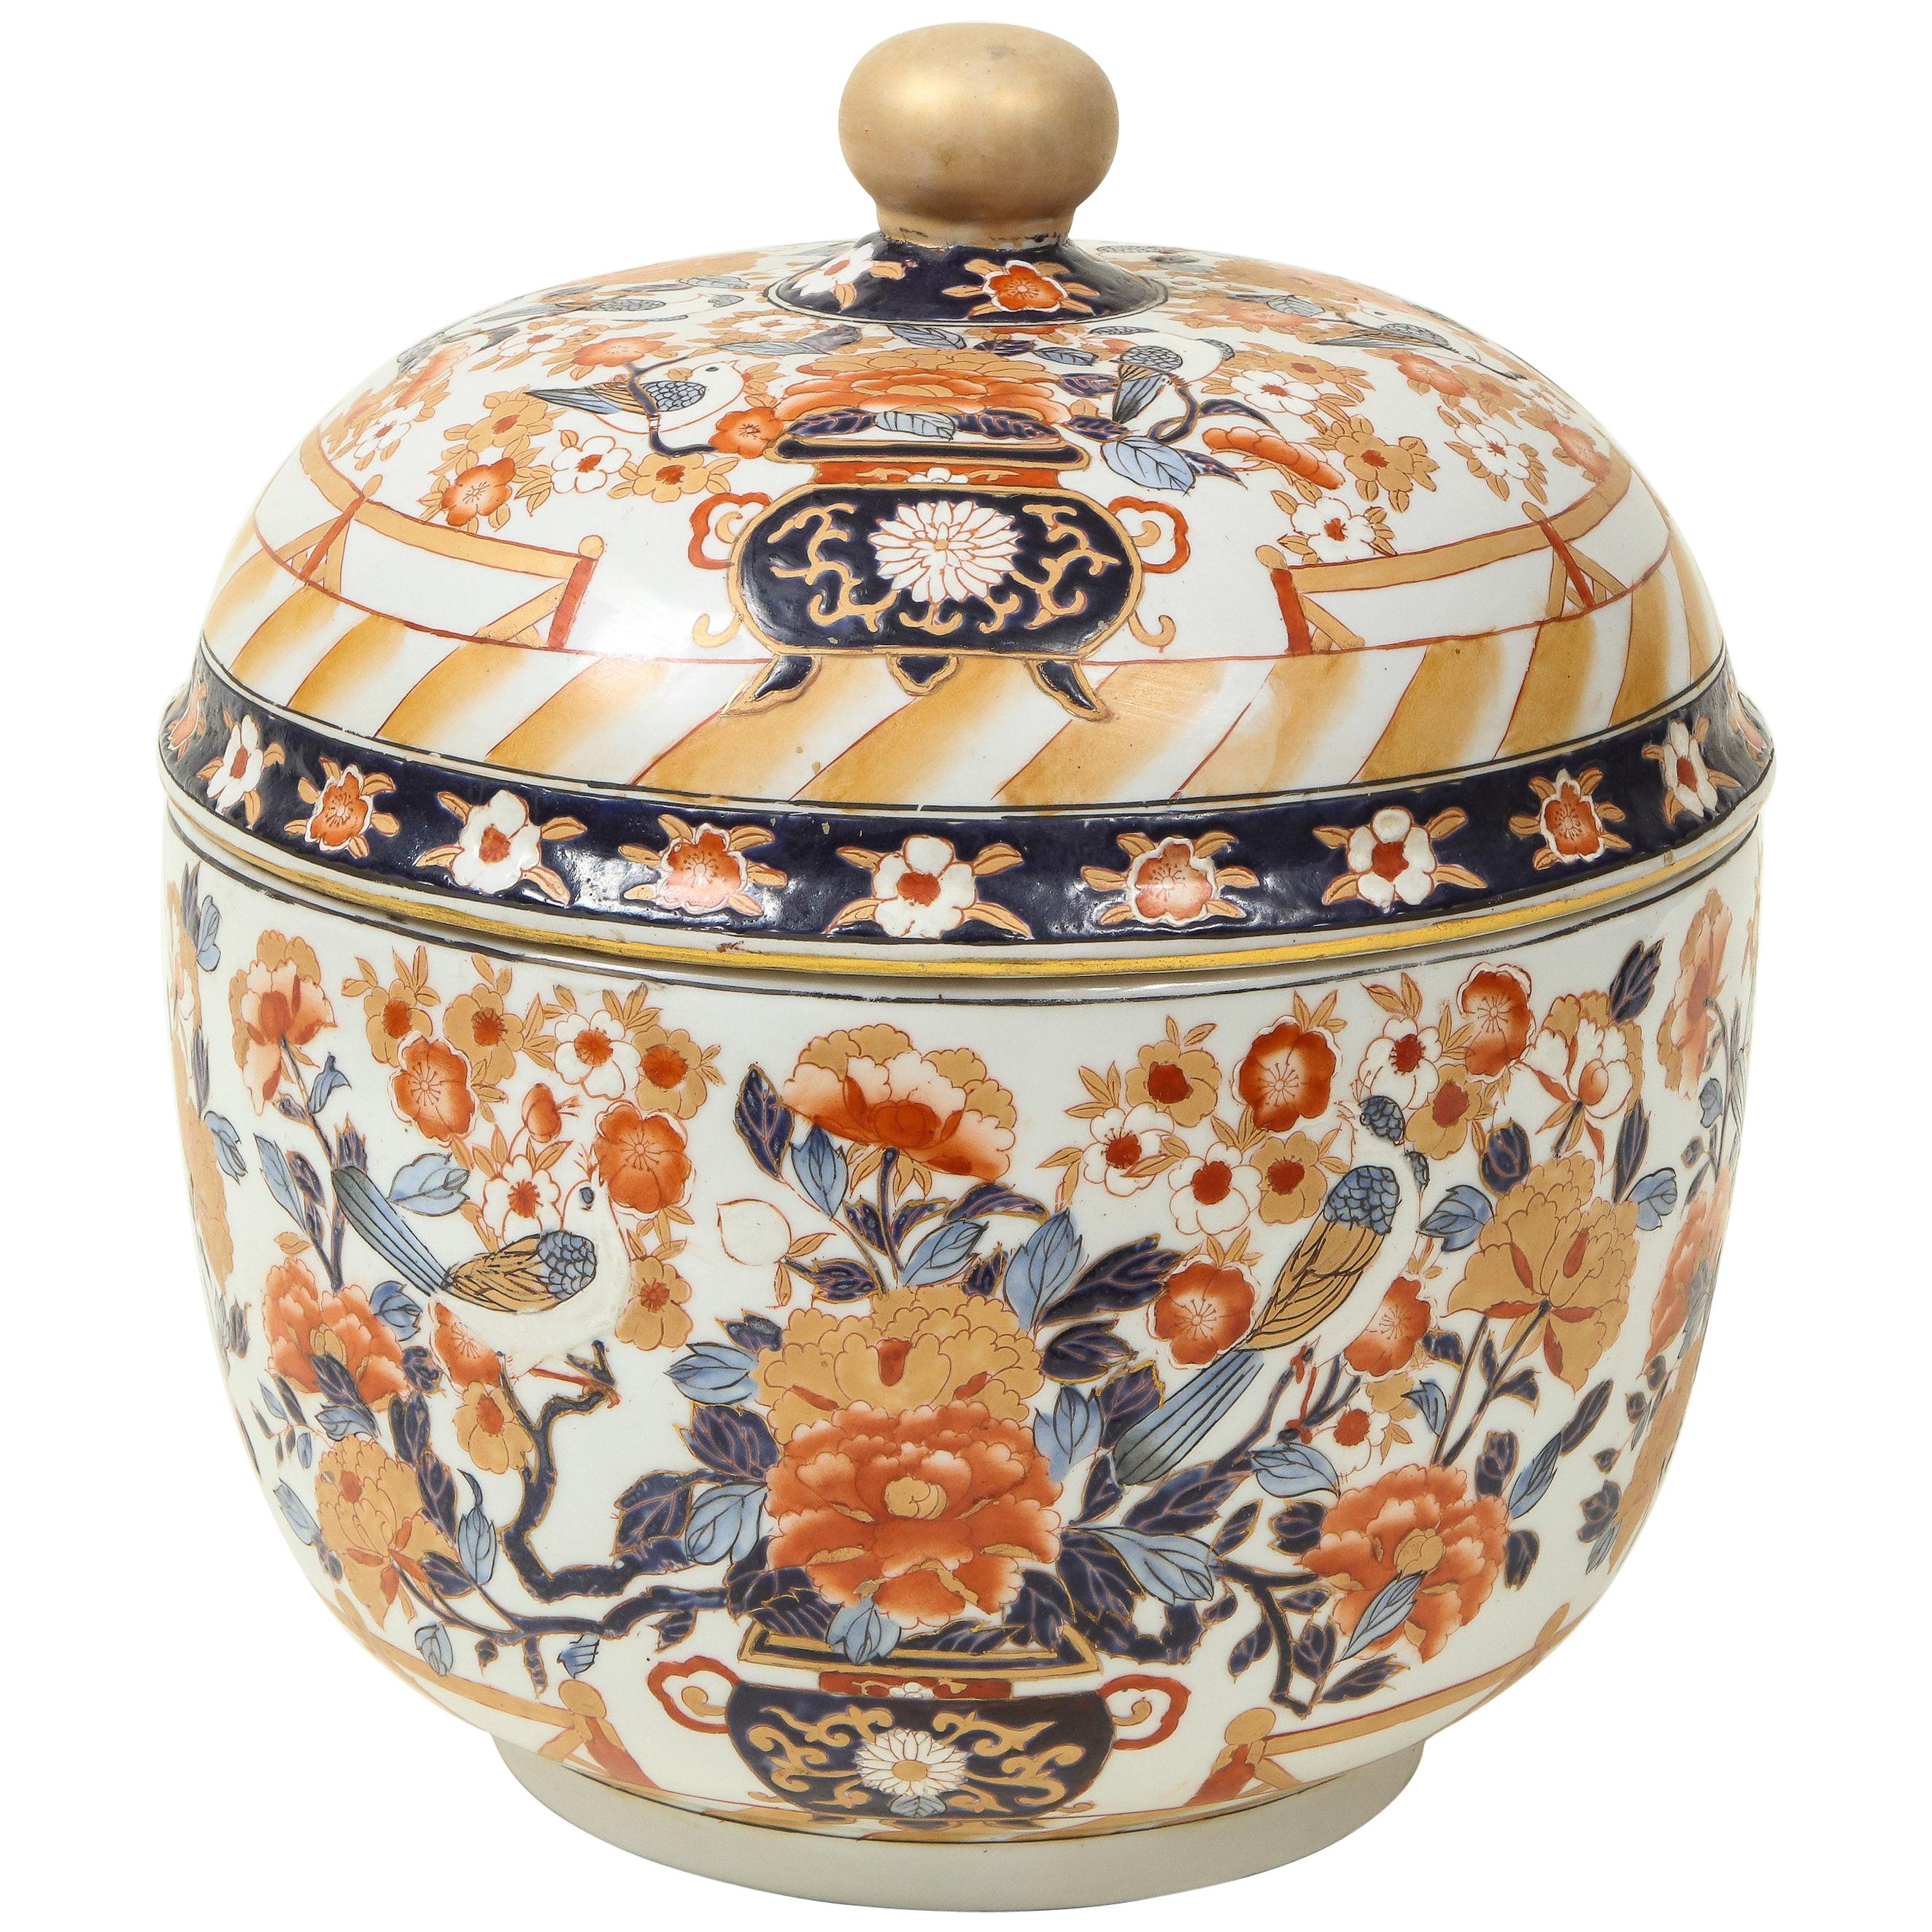 Chinese Export Porcelain Imari Covered Tureen